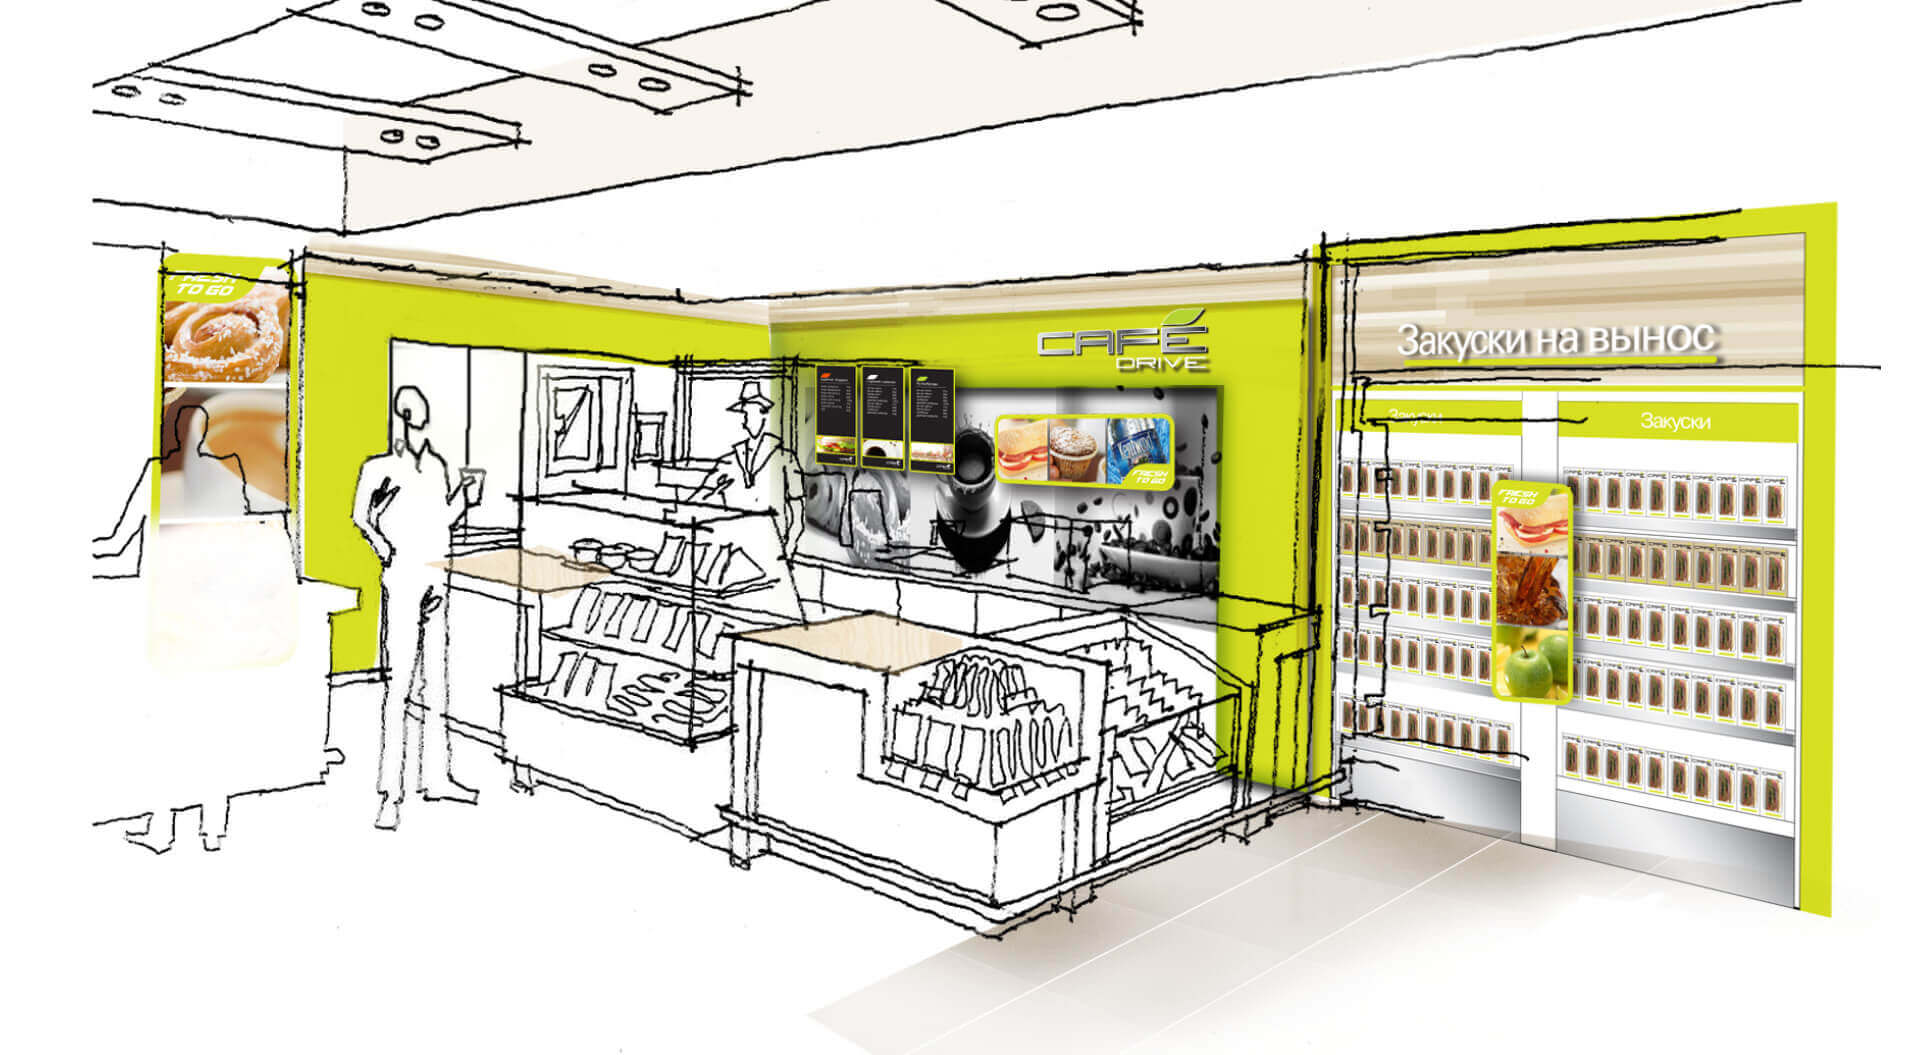 Gazprom Neft Russia Petrol Forecourts Café Drive convenience store interior design